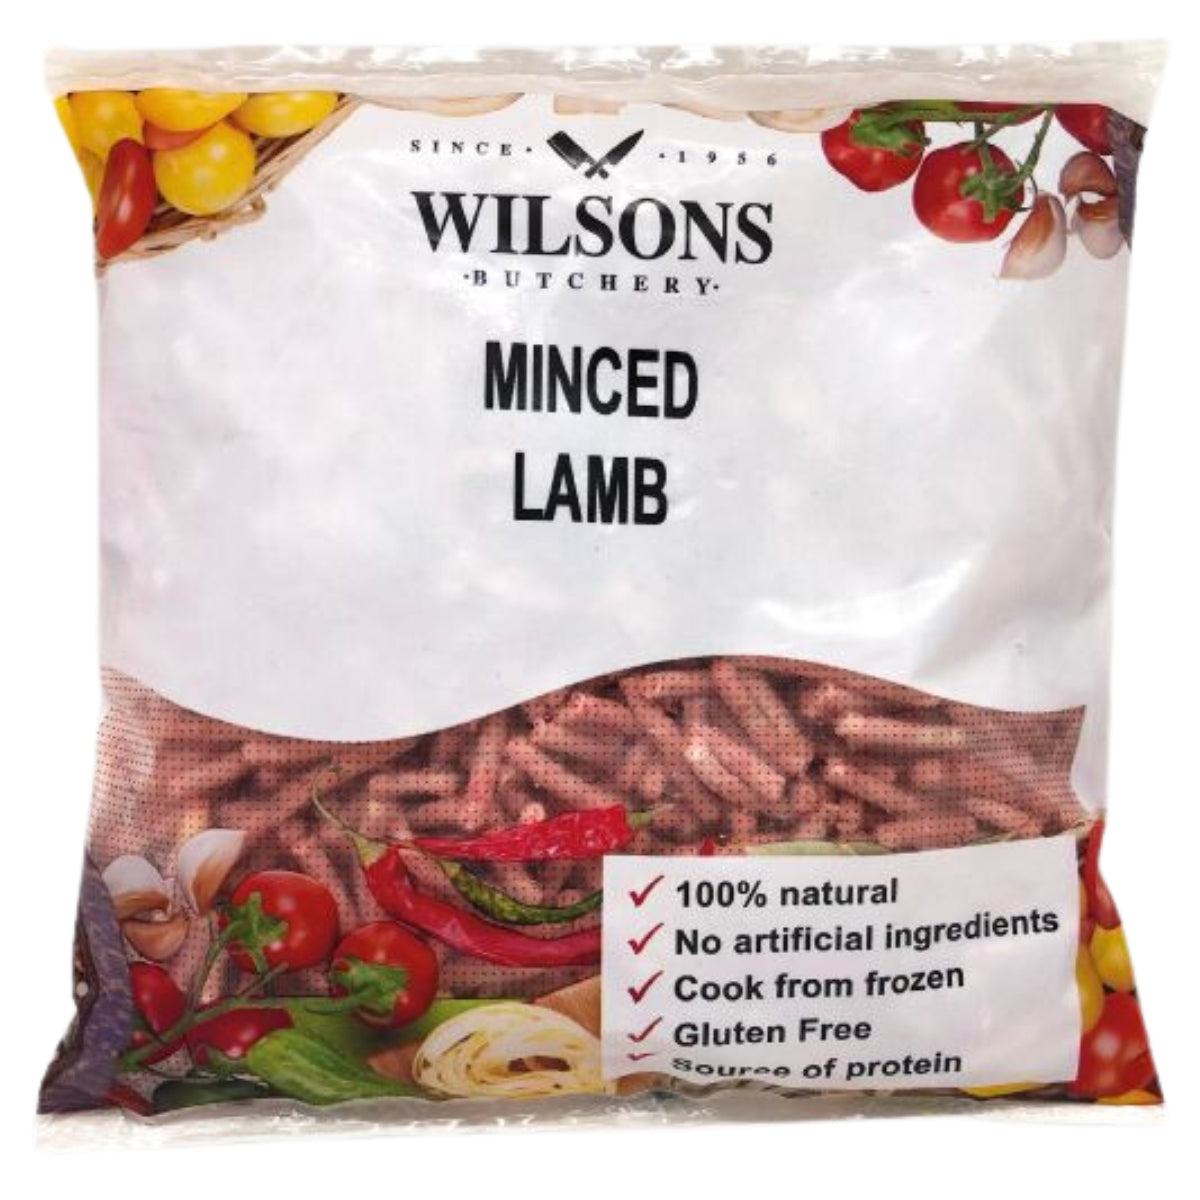 Wilsons Butchery - Lamb Mince - 400g in a bag.